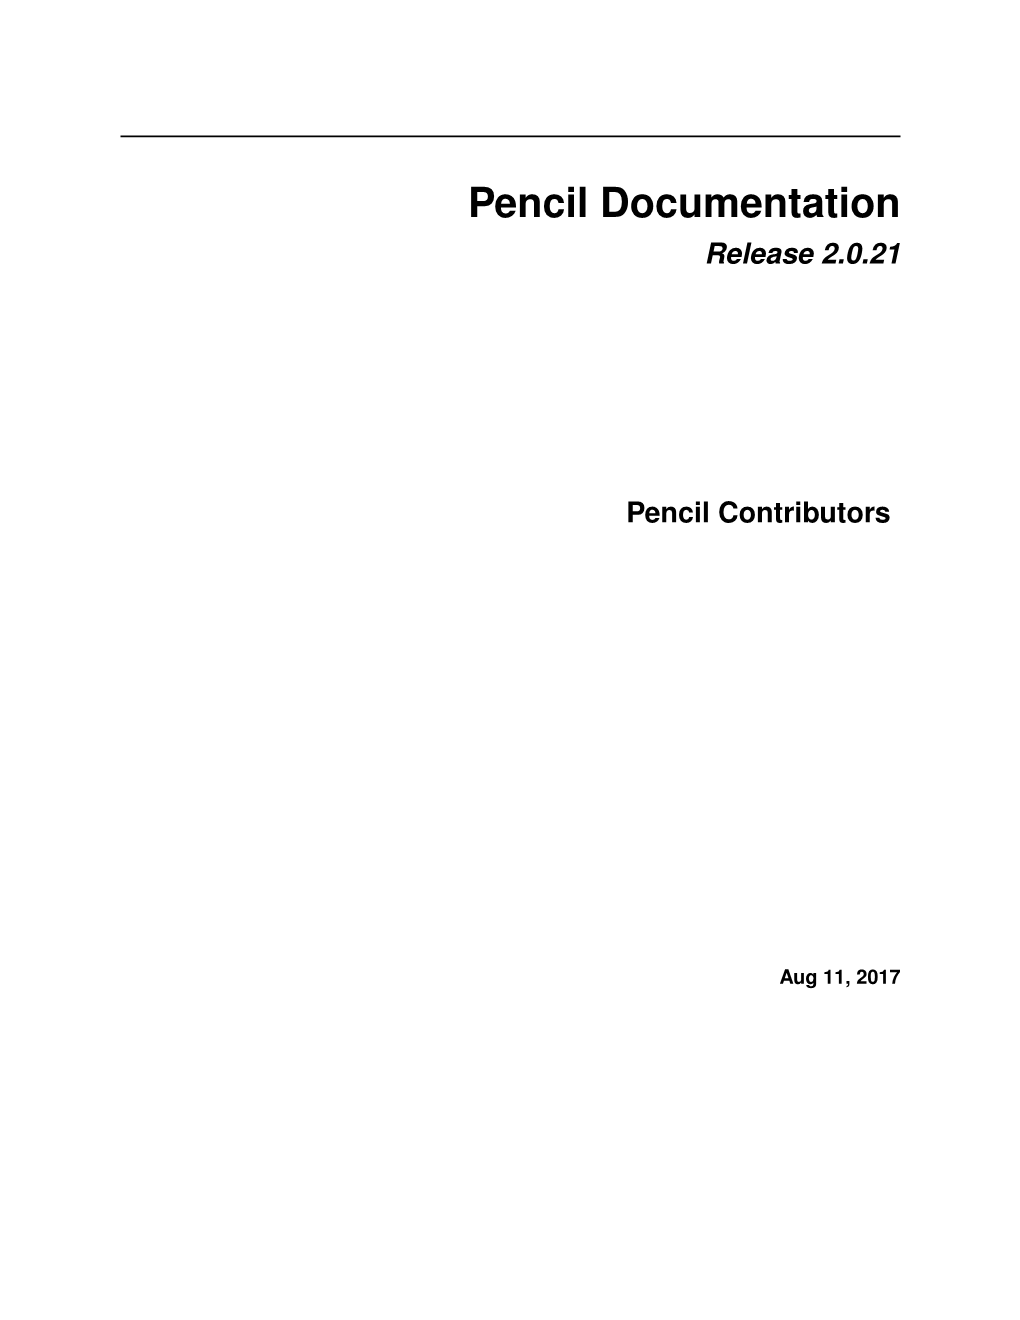 Pencil Documentation Release 2.0.21